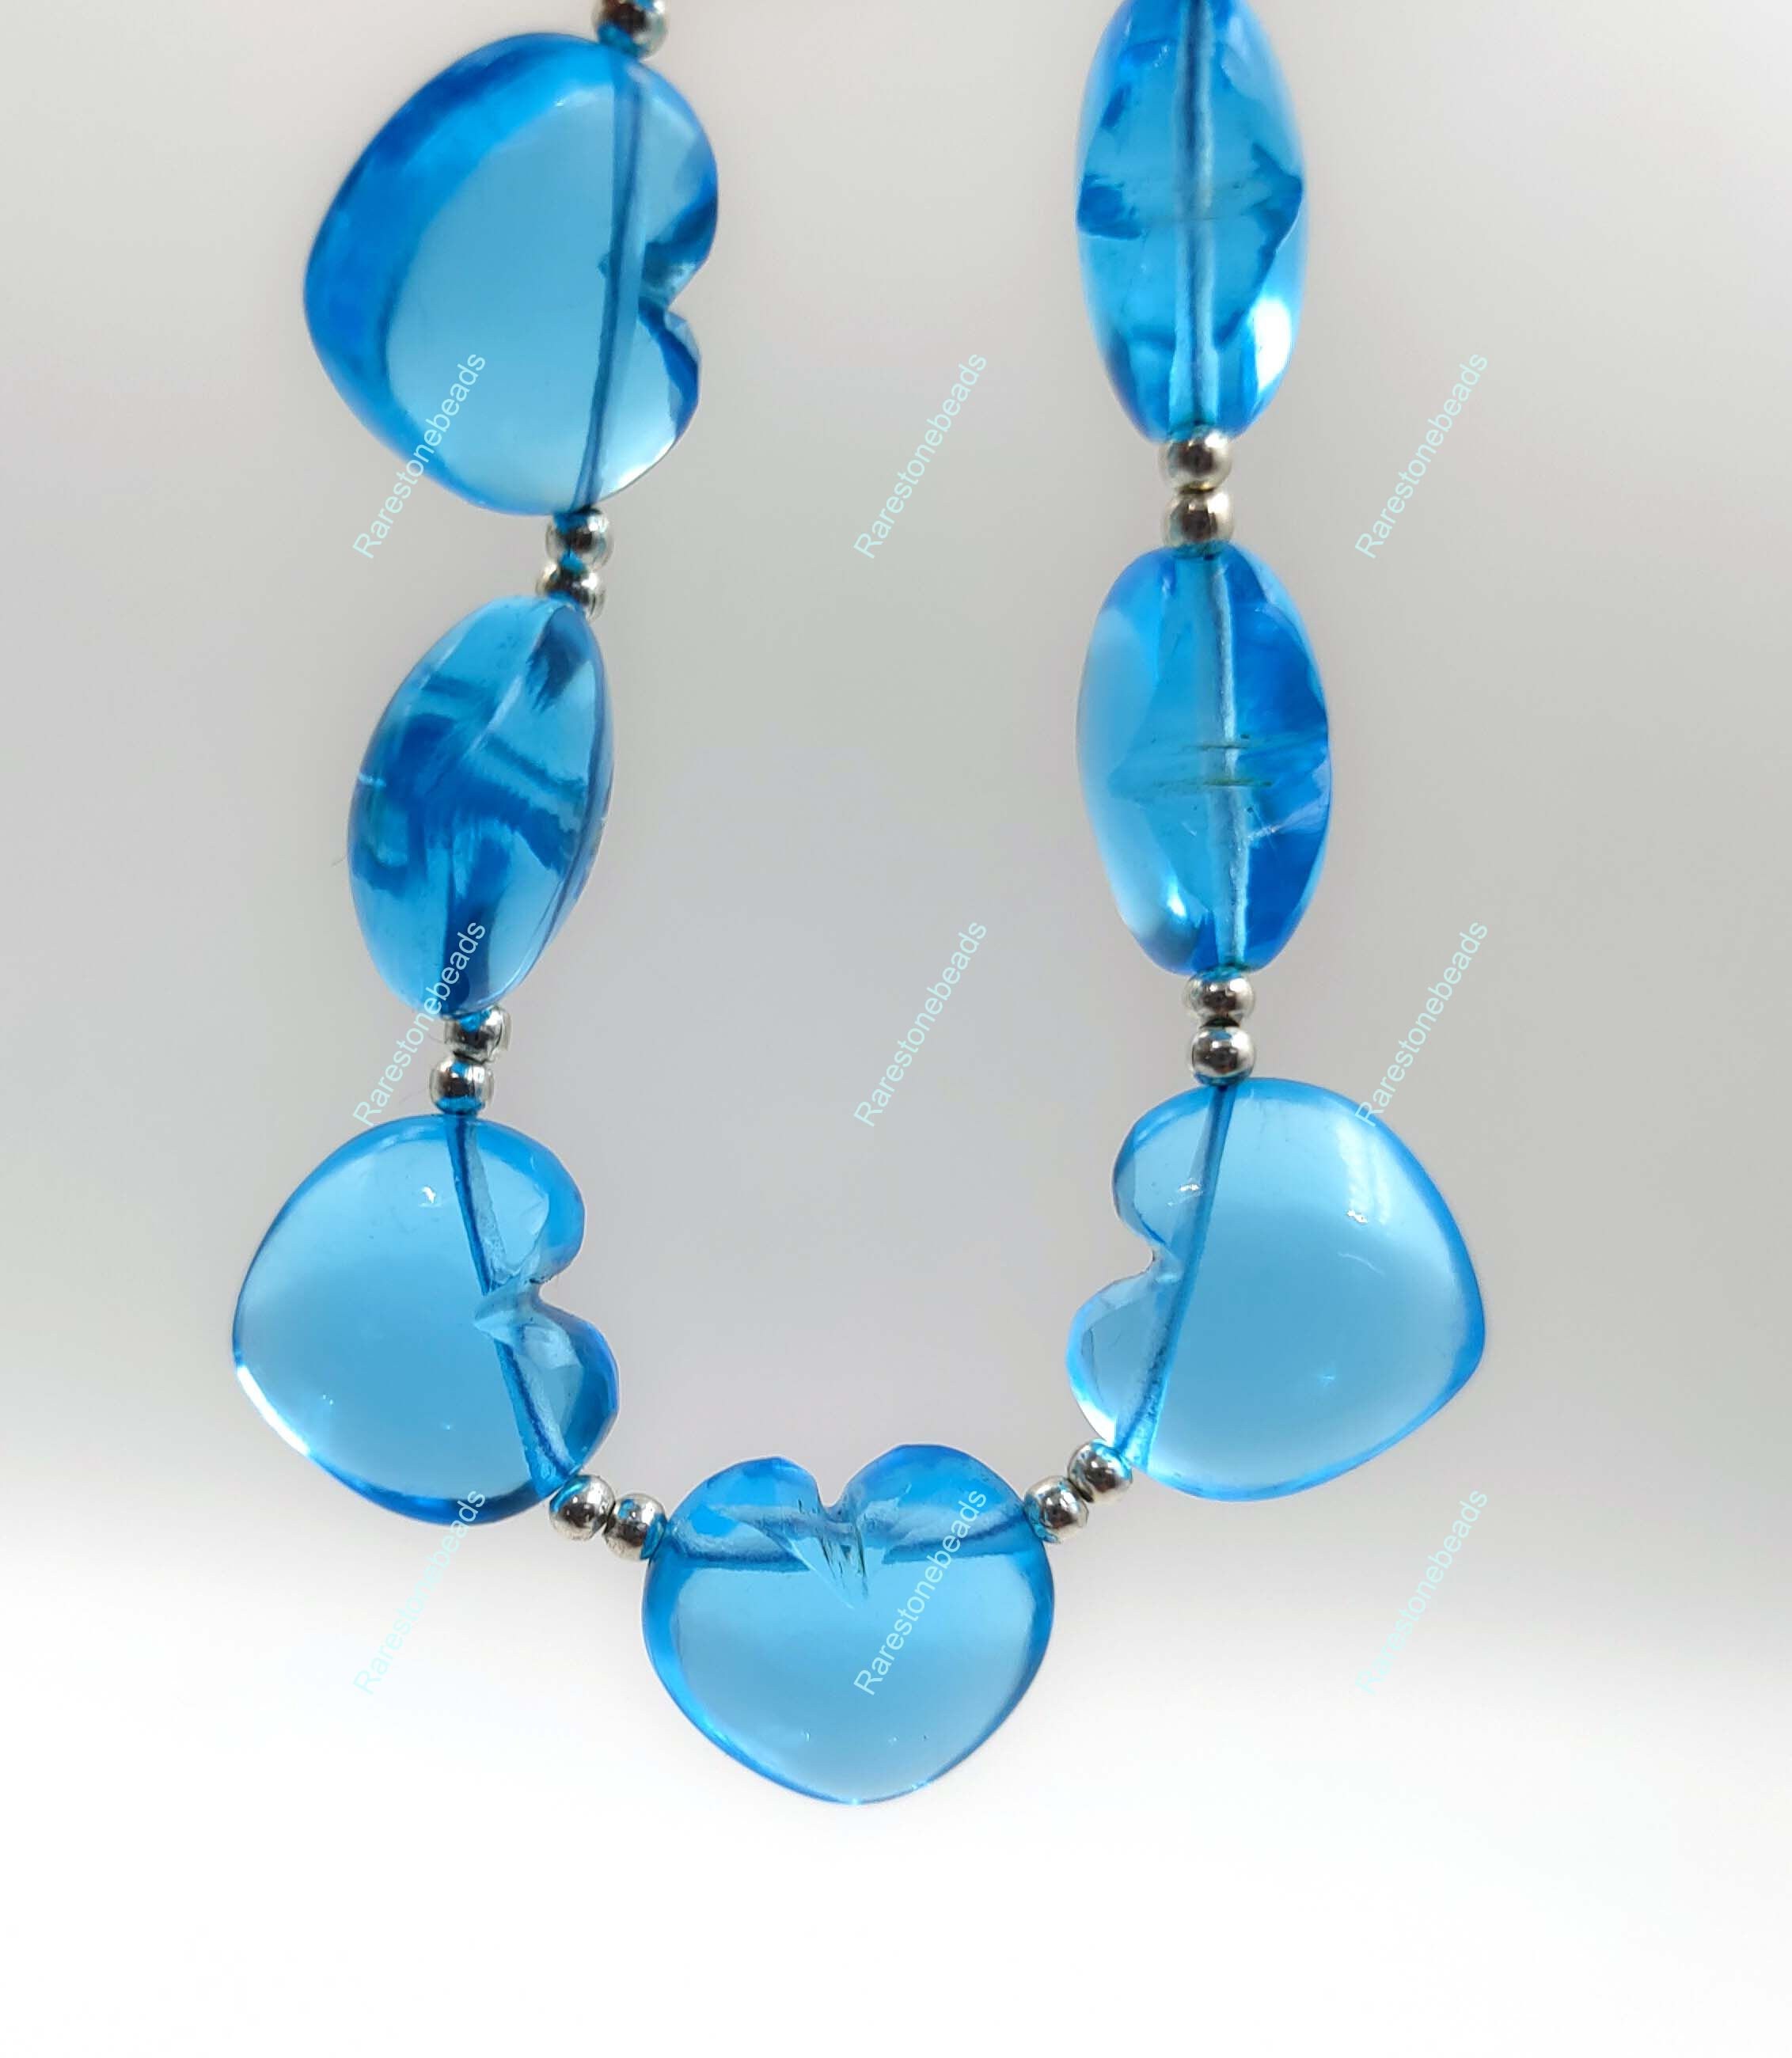 Blue Toapz heart Top drilled gemstone size 13x14 mm Sky Blue Topaz 6 Pieces Blue Topaz Glass gemstone Heart Smooth Polish gemstone